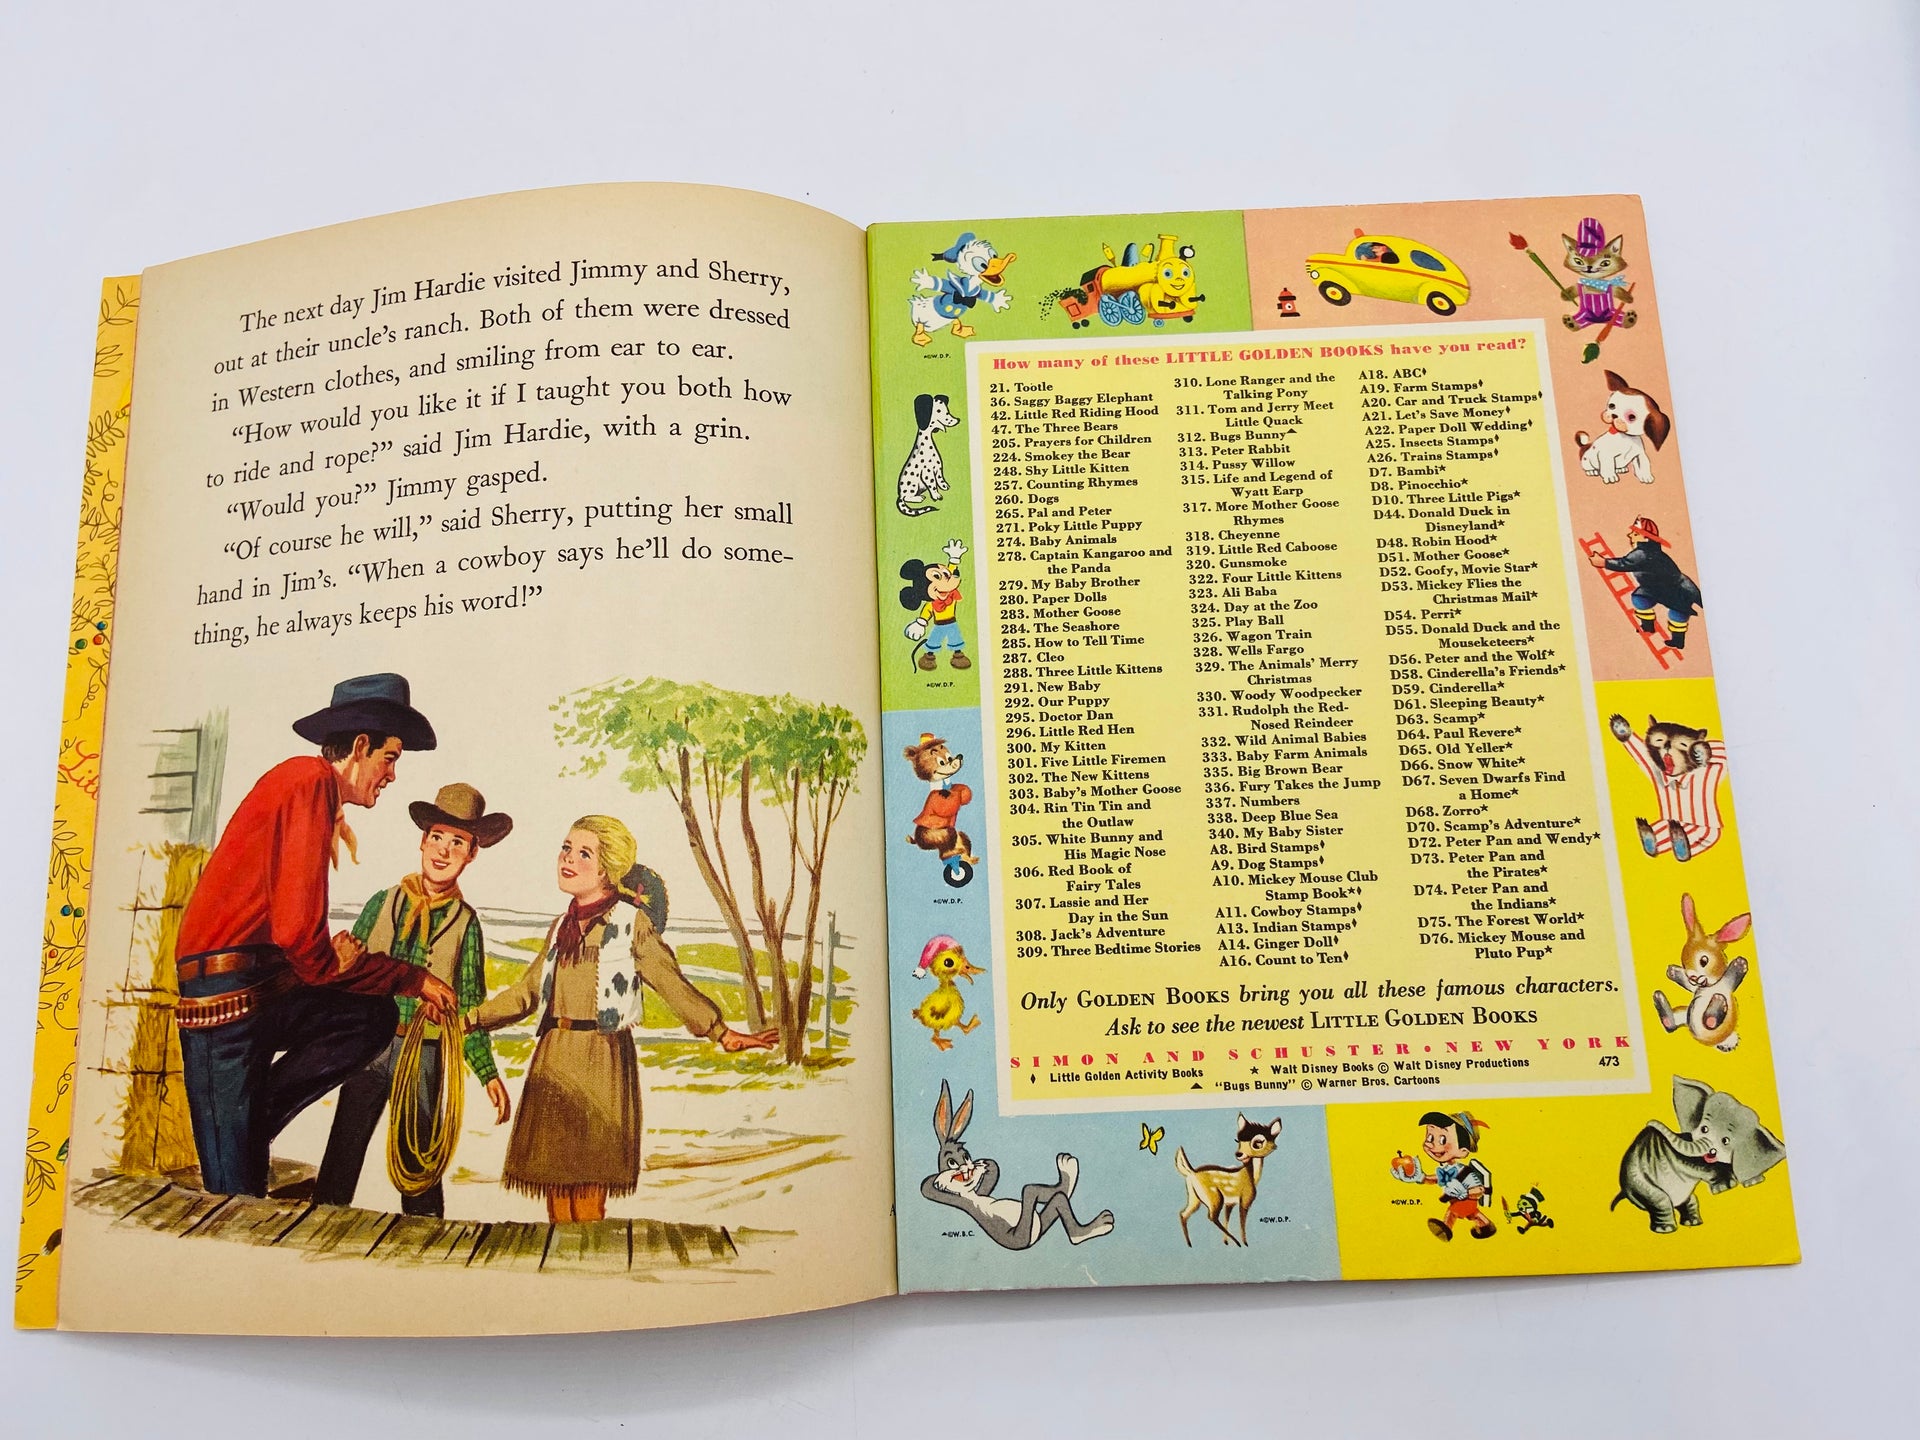 Tales of Wells Fargo Vintage Little Golden Book 1st Edition